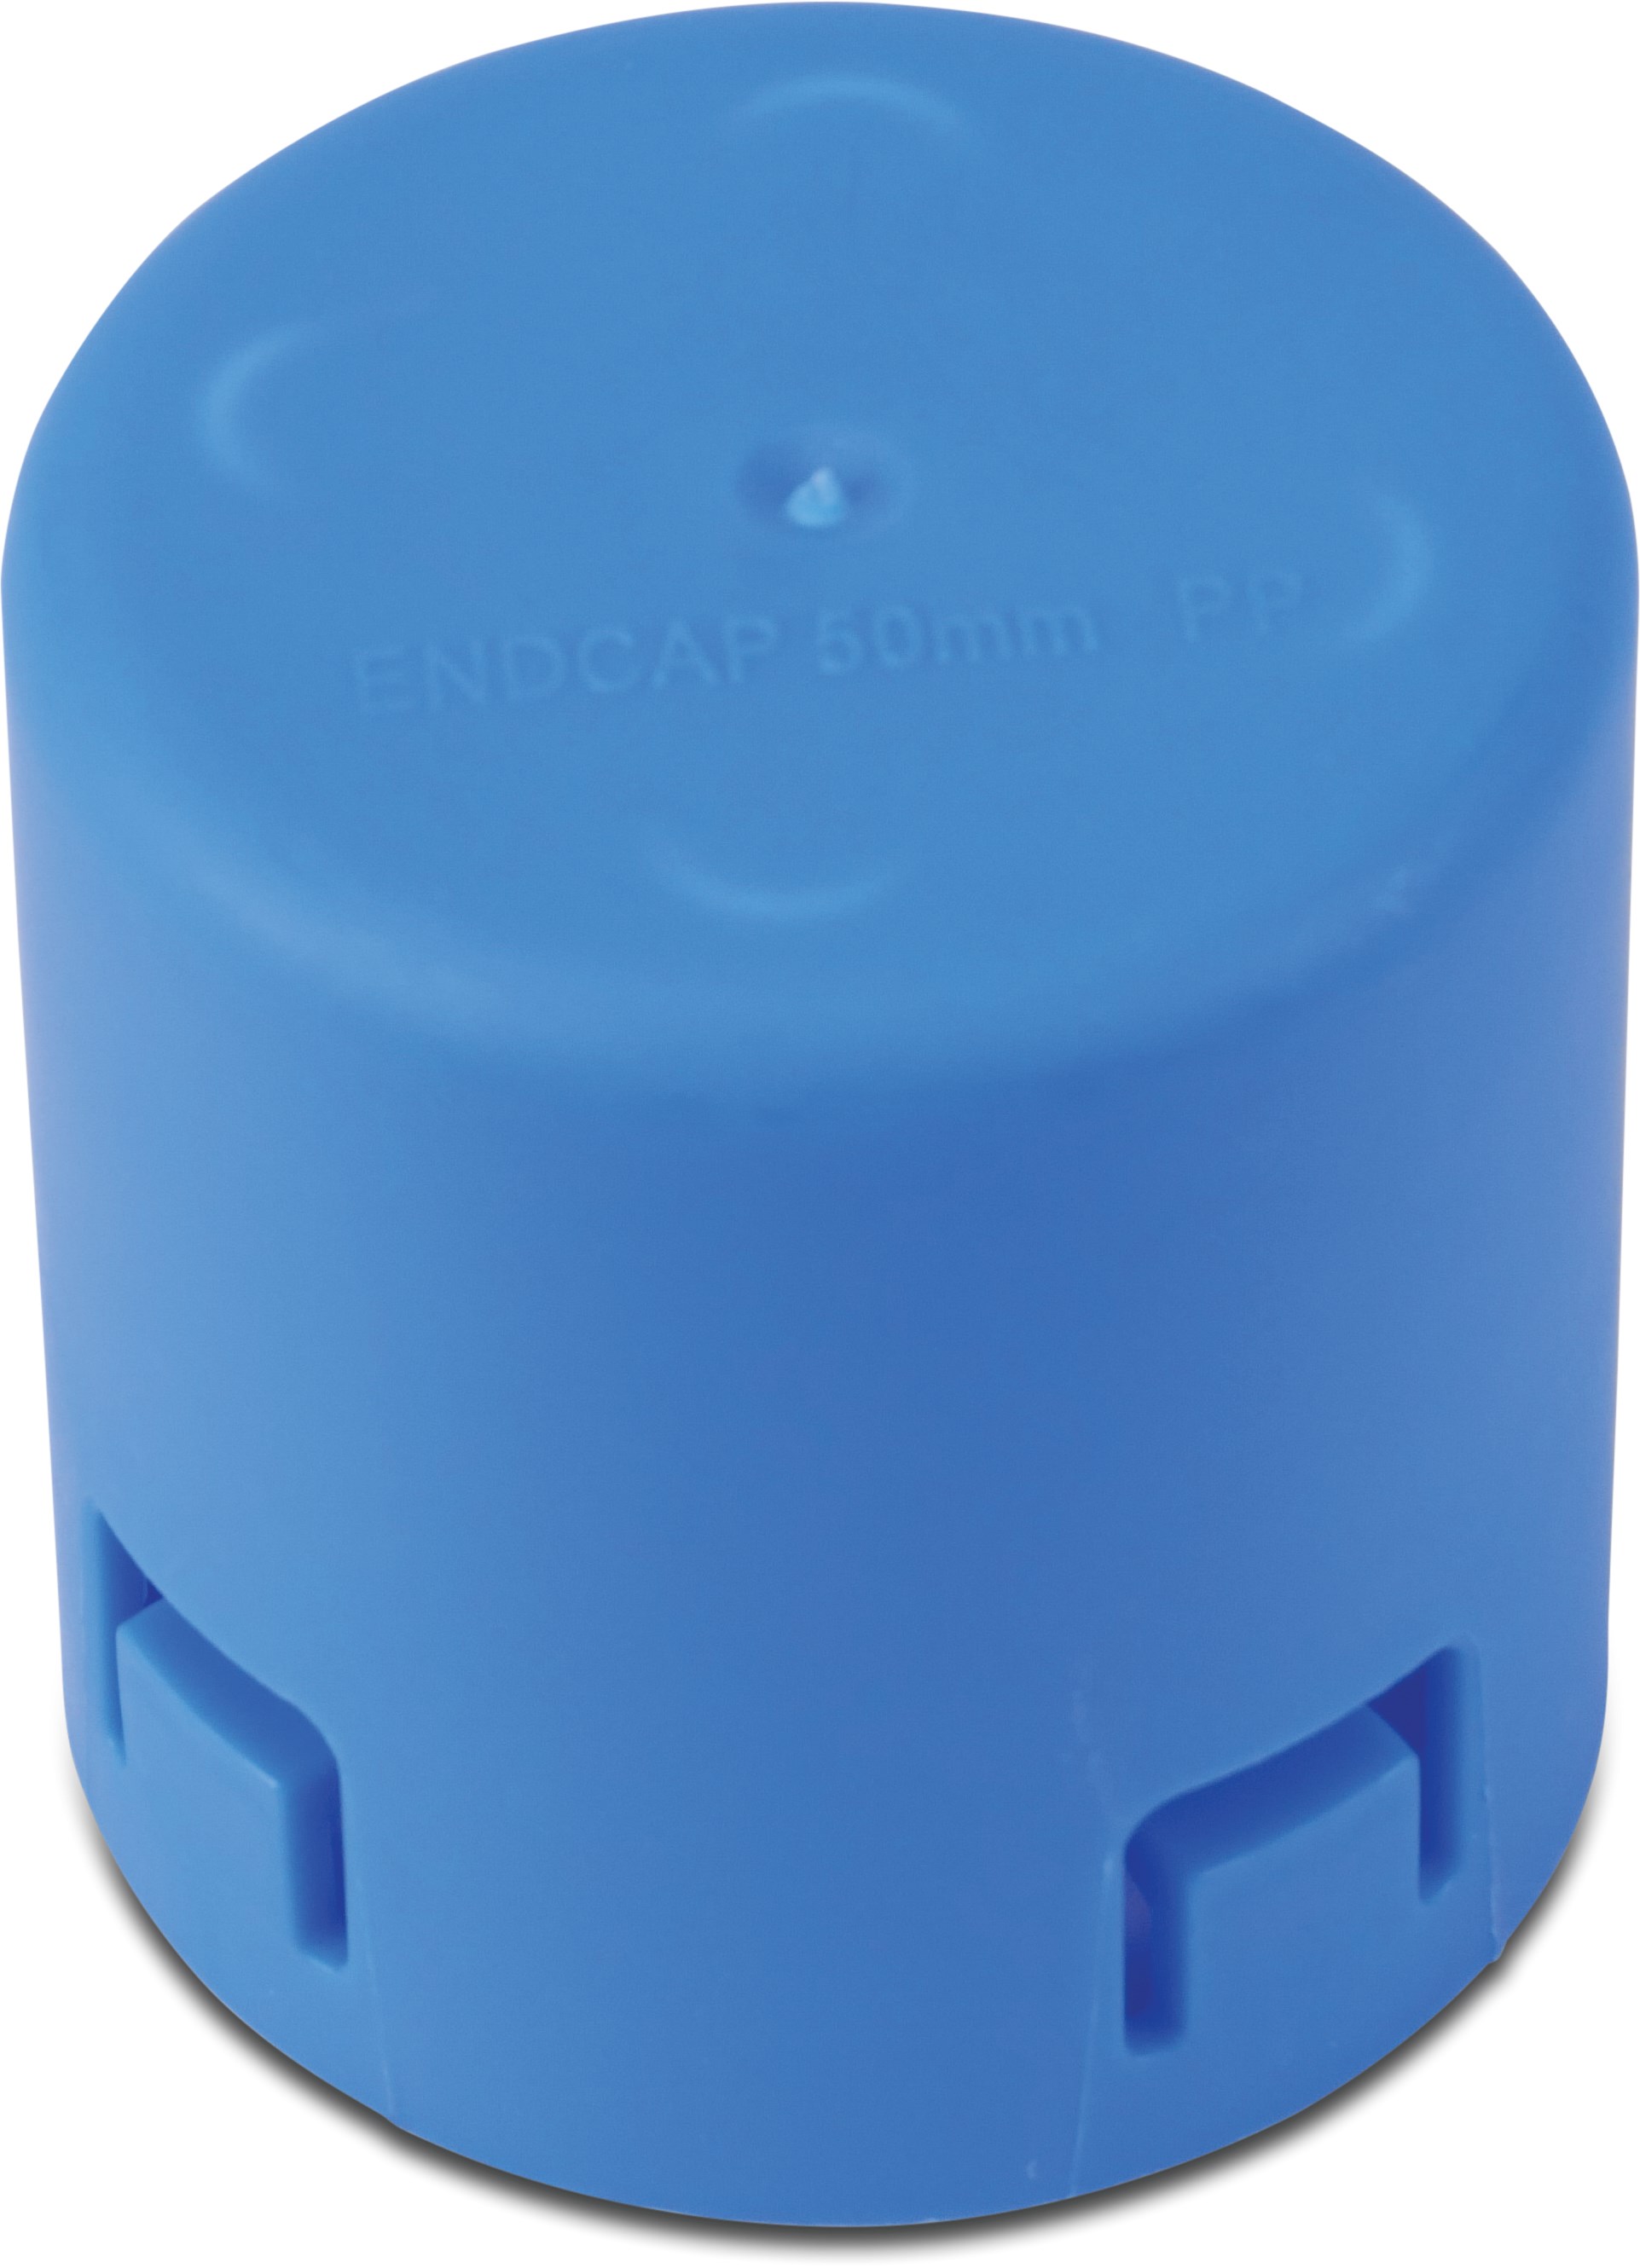 Cap plastic 50 mm socket blue type closed